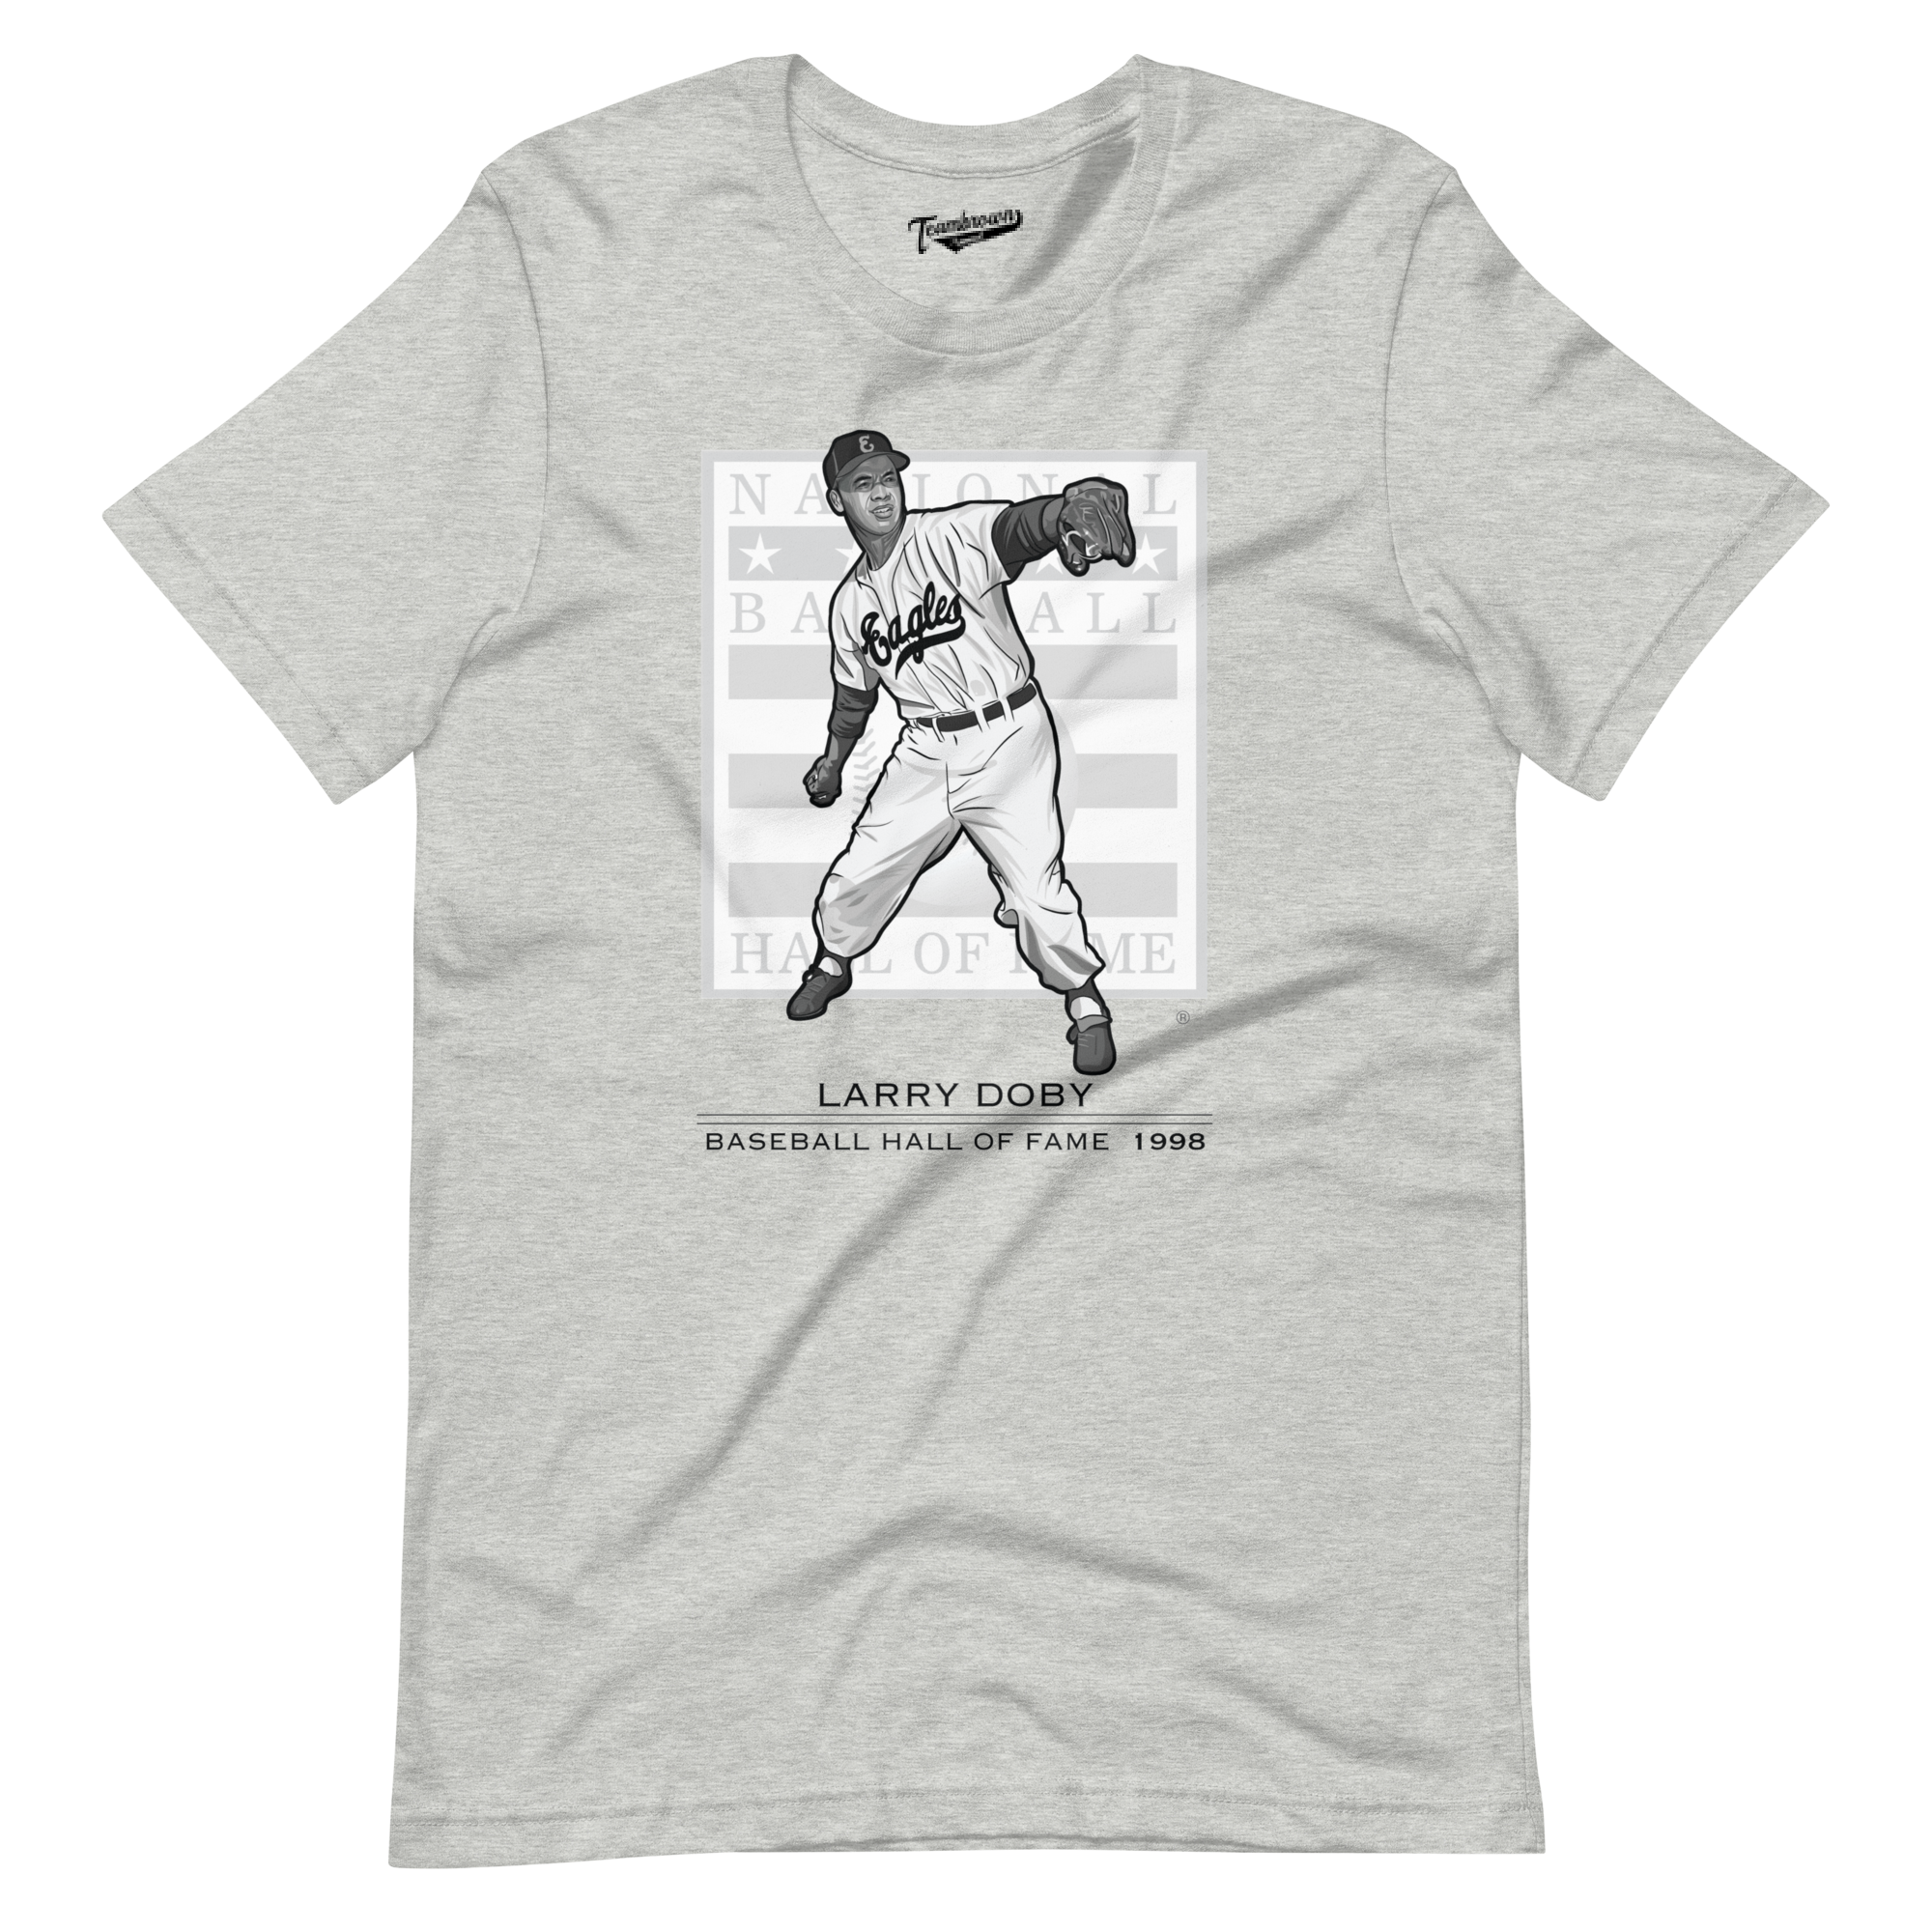 Baseball Hall of Fame Members - Larry Doby - Unisex T-Shirt